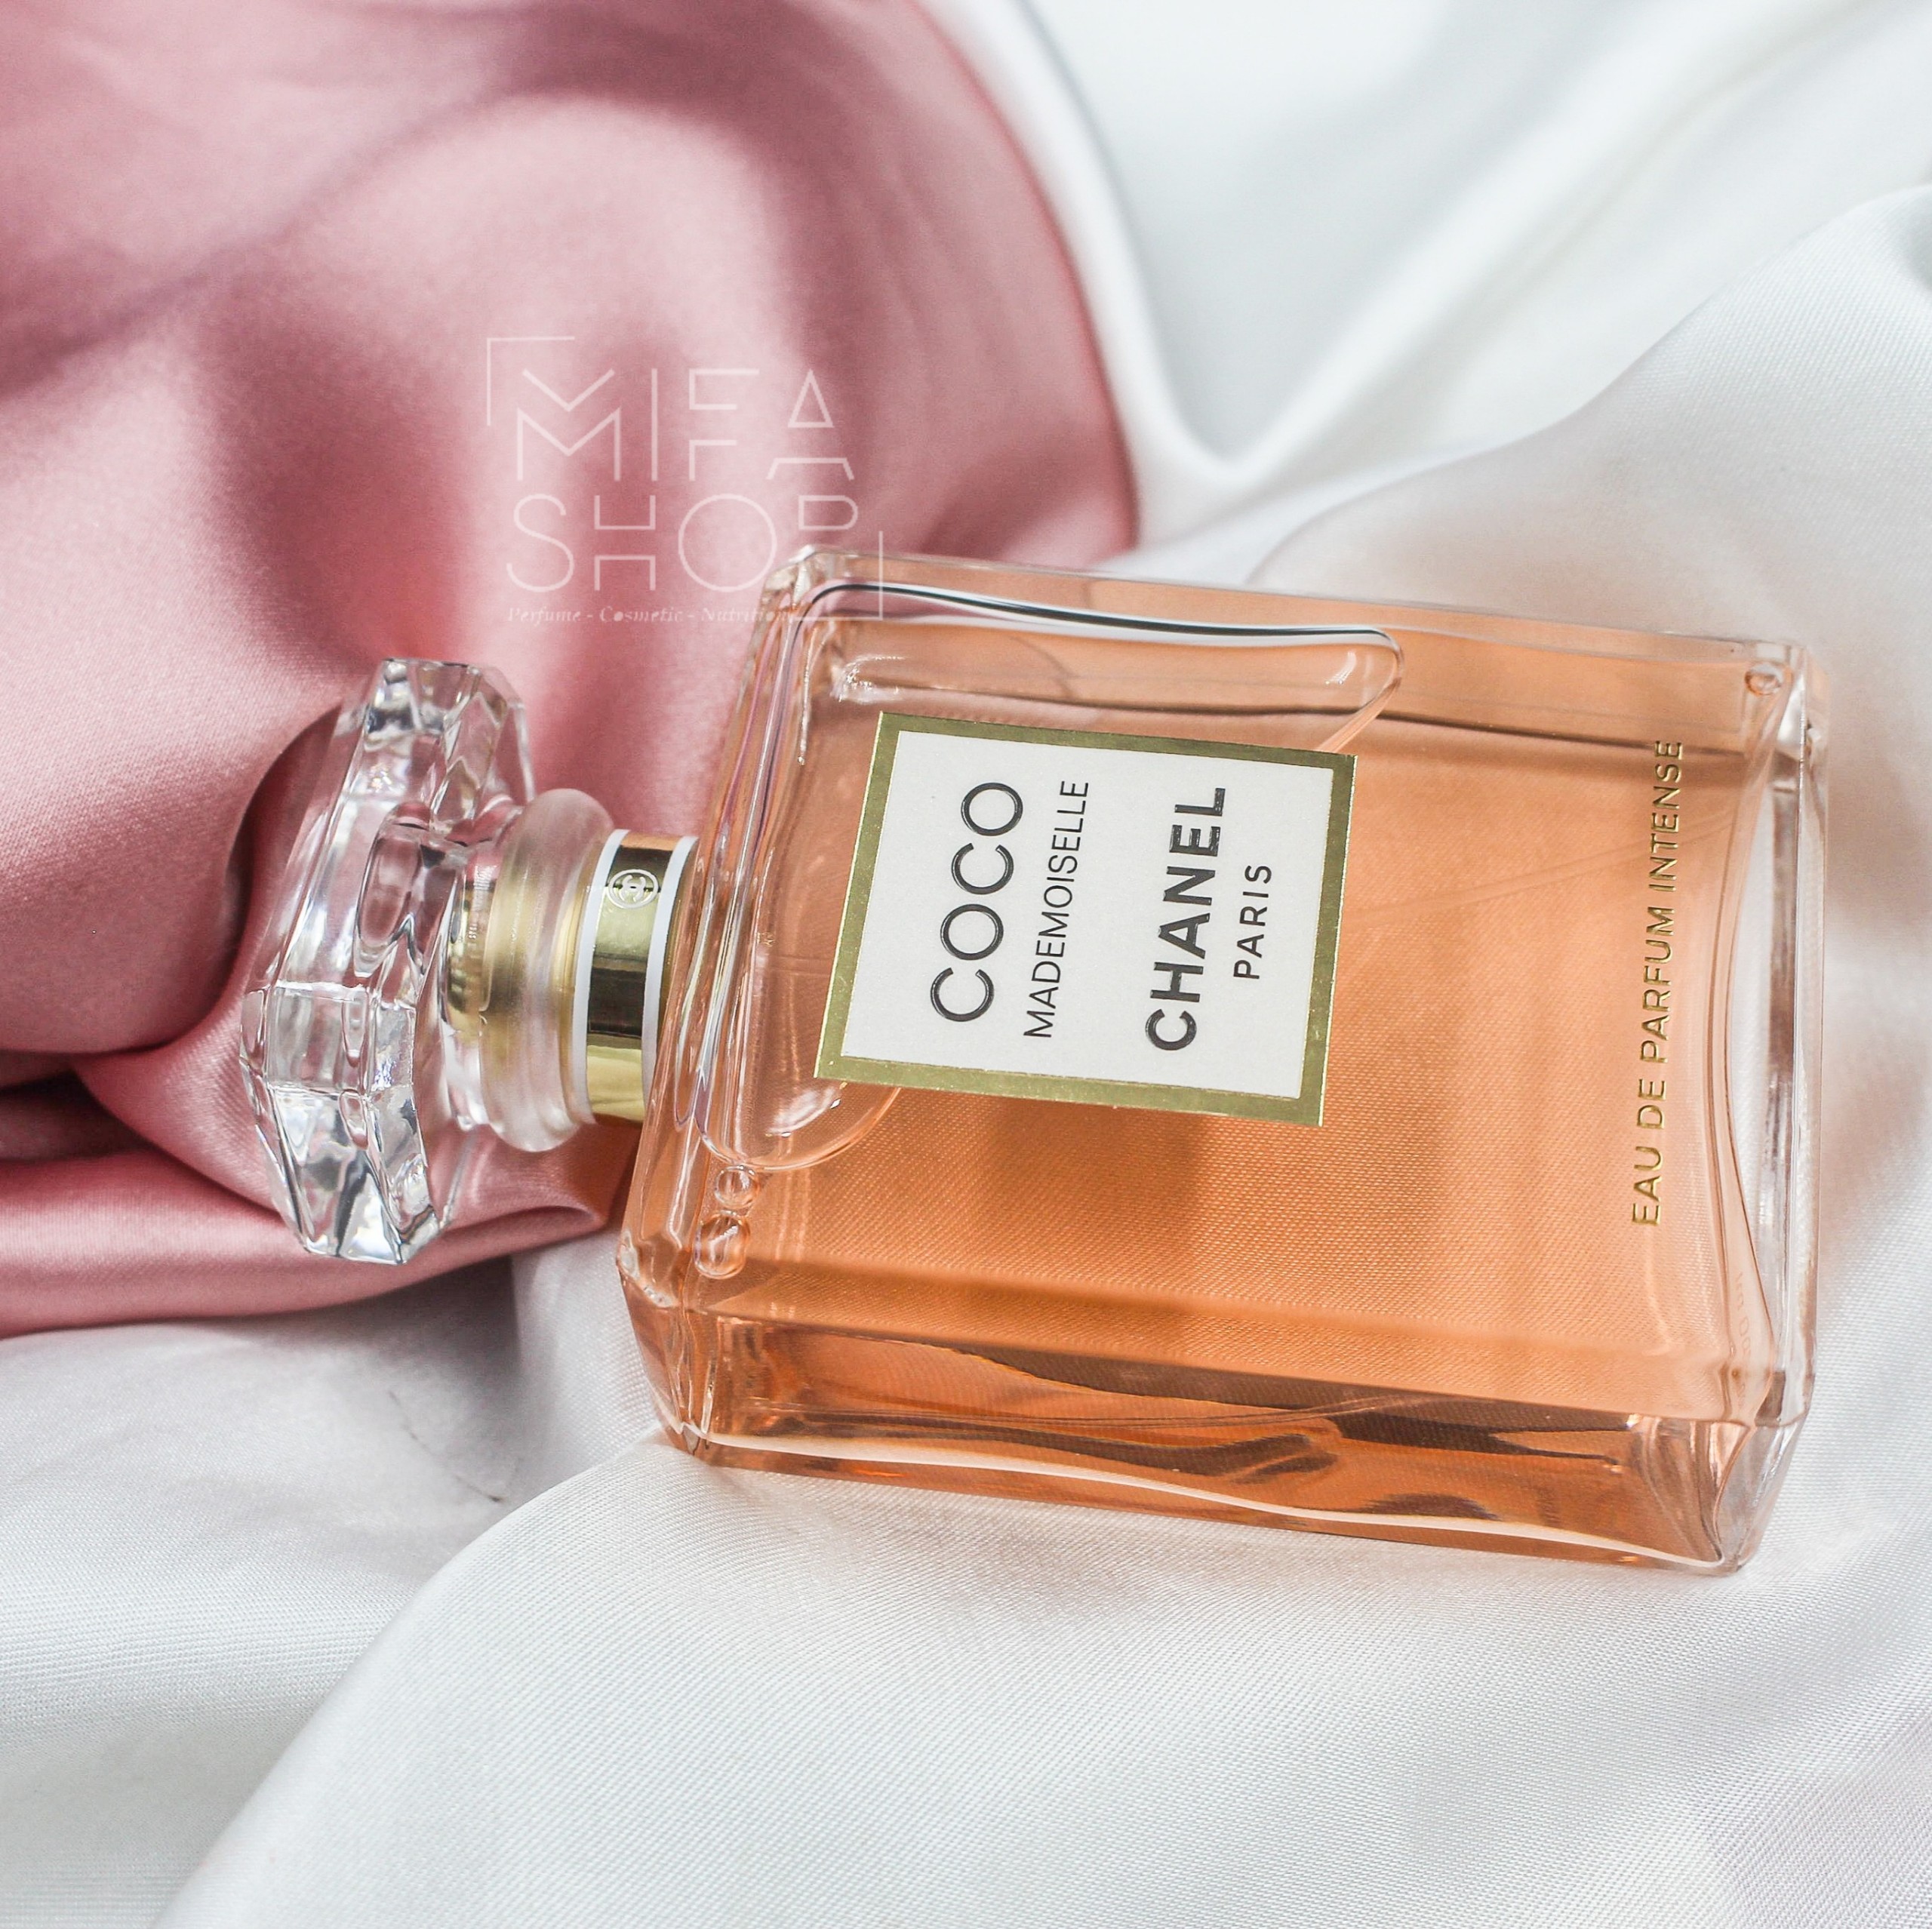 Chanel coco mademoiselle intense eau de parfum | Mifashop